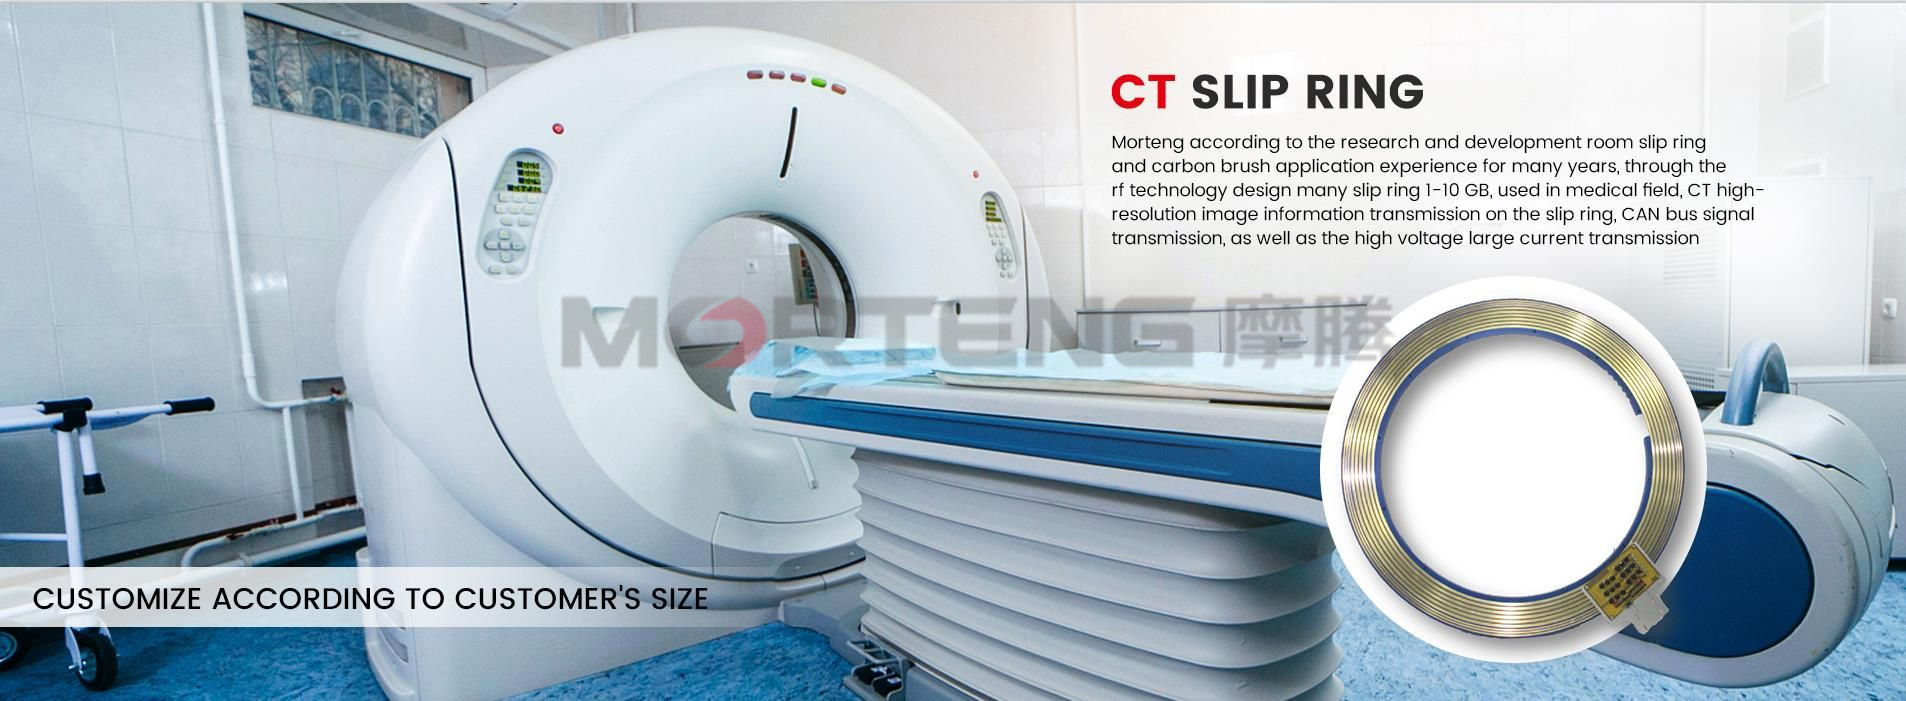 Slip Ring per scansione CT medica (2)